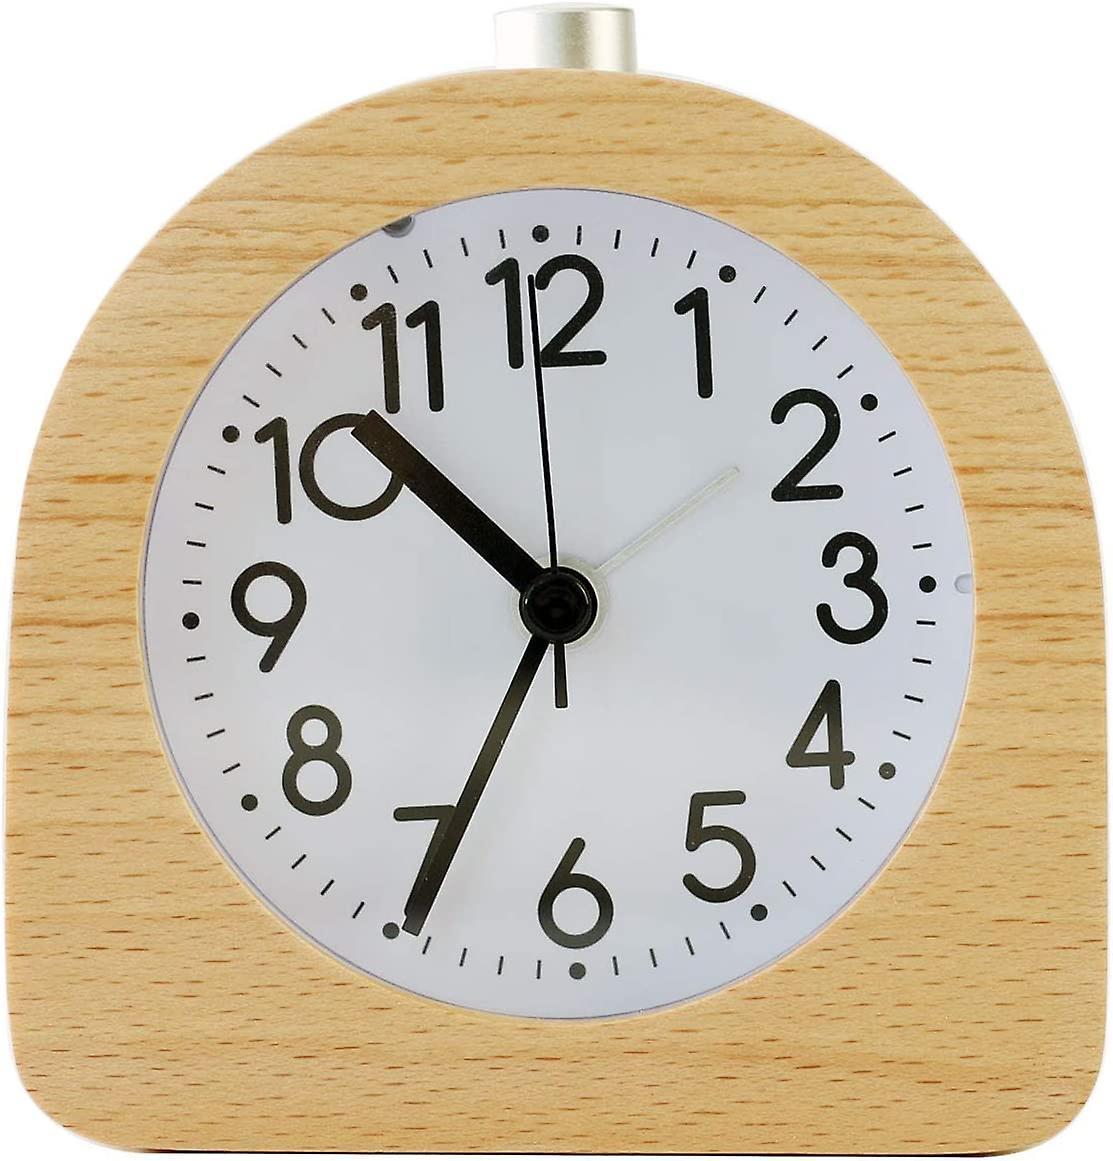 Solid Wood Analog Alarm Clock